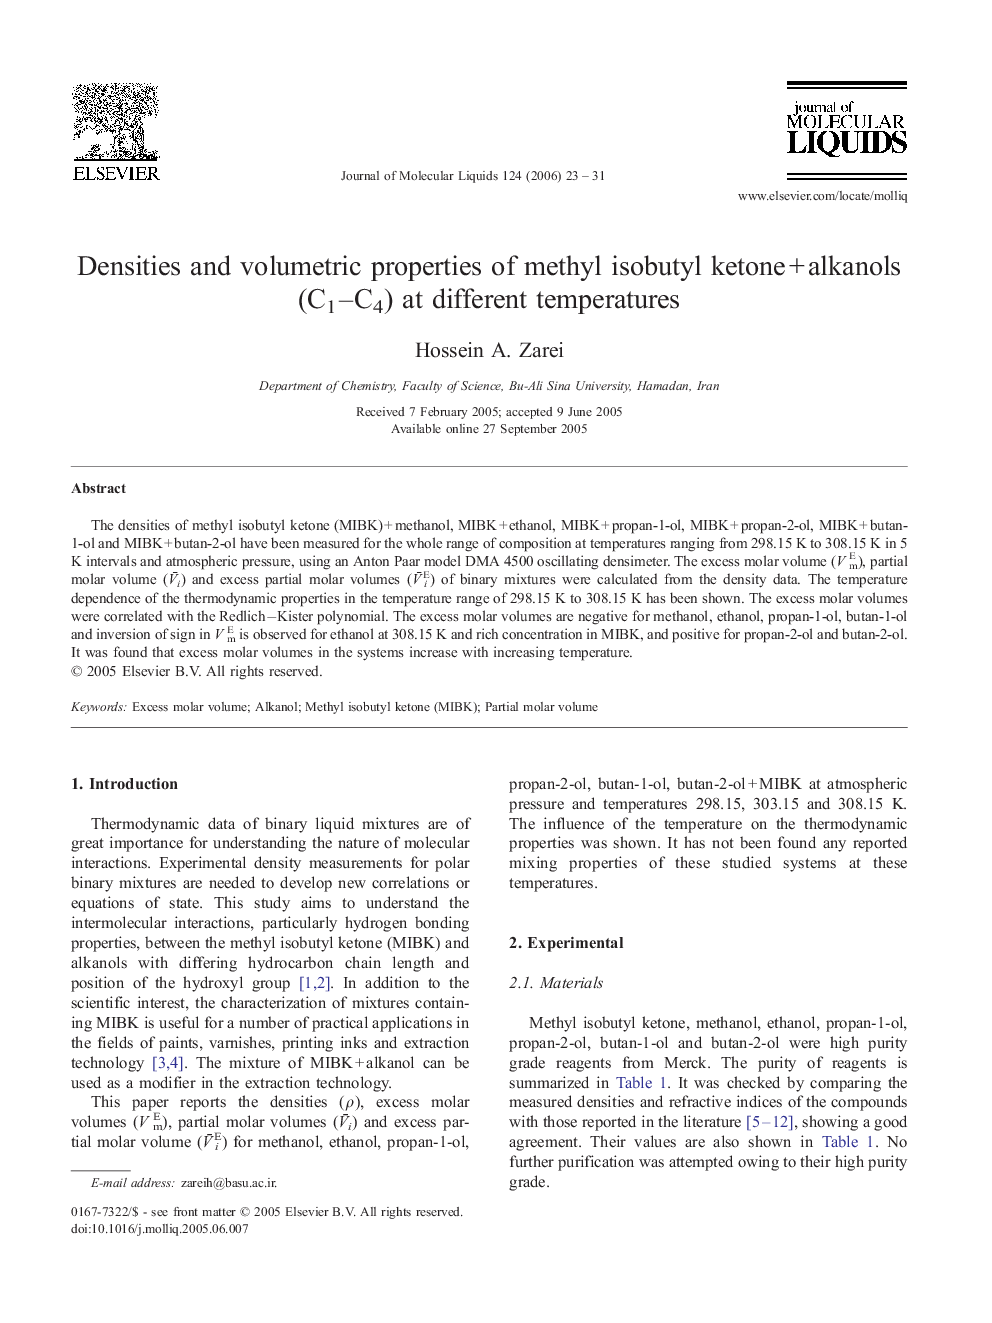 Densities and volumetric properties of methyl isobutyl ketoneÂ +Â alkanols (C1-C4) at different temperatures